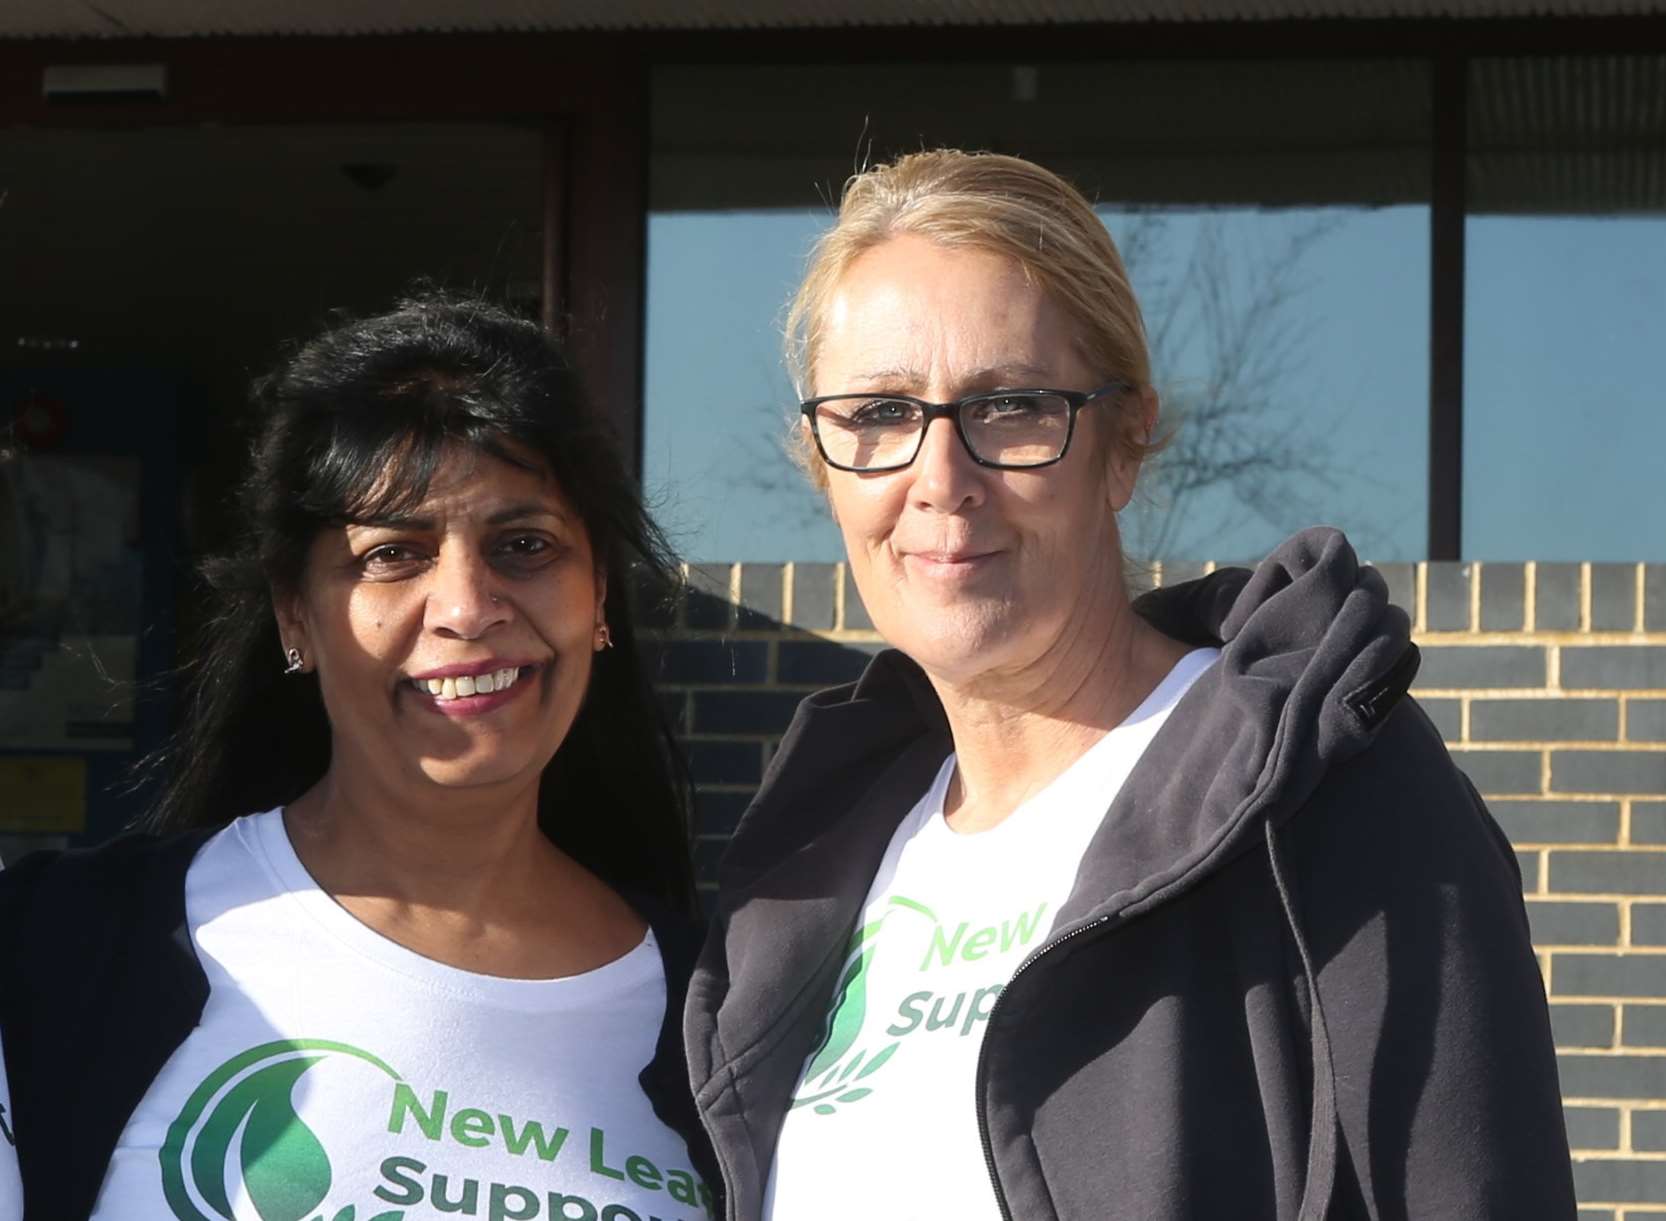 New Leaf Support founder Hasmita Reardon and team member Amanda